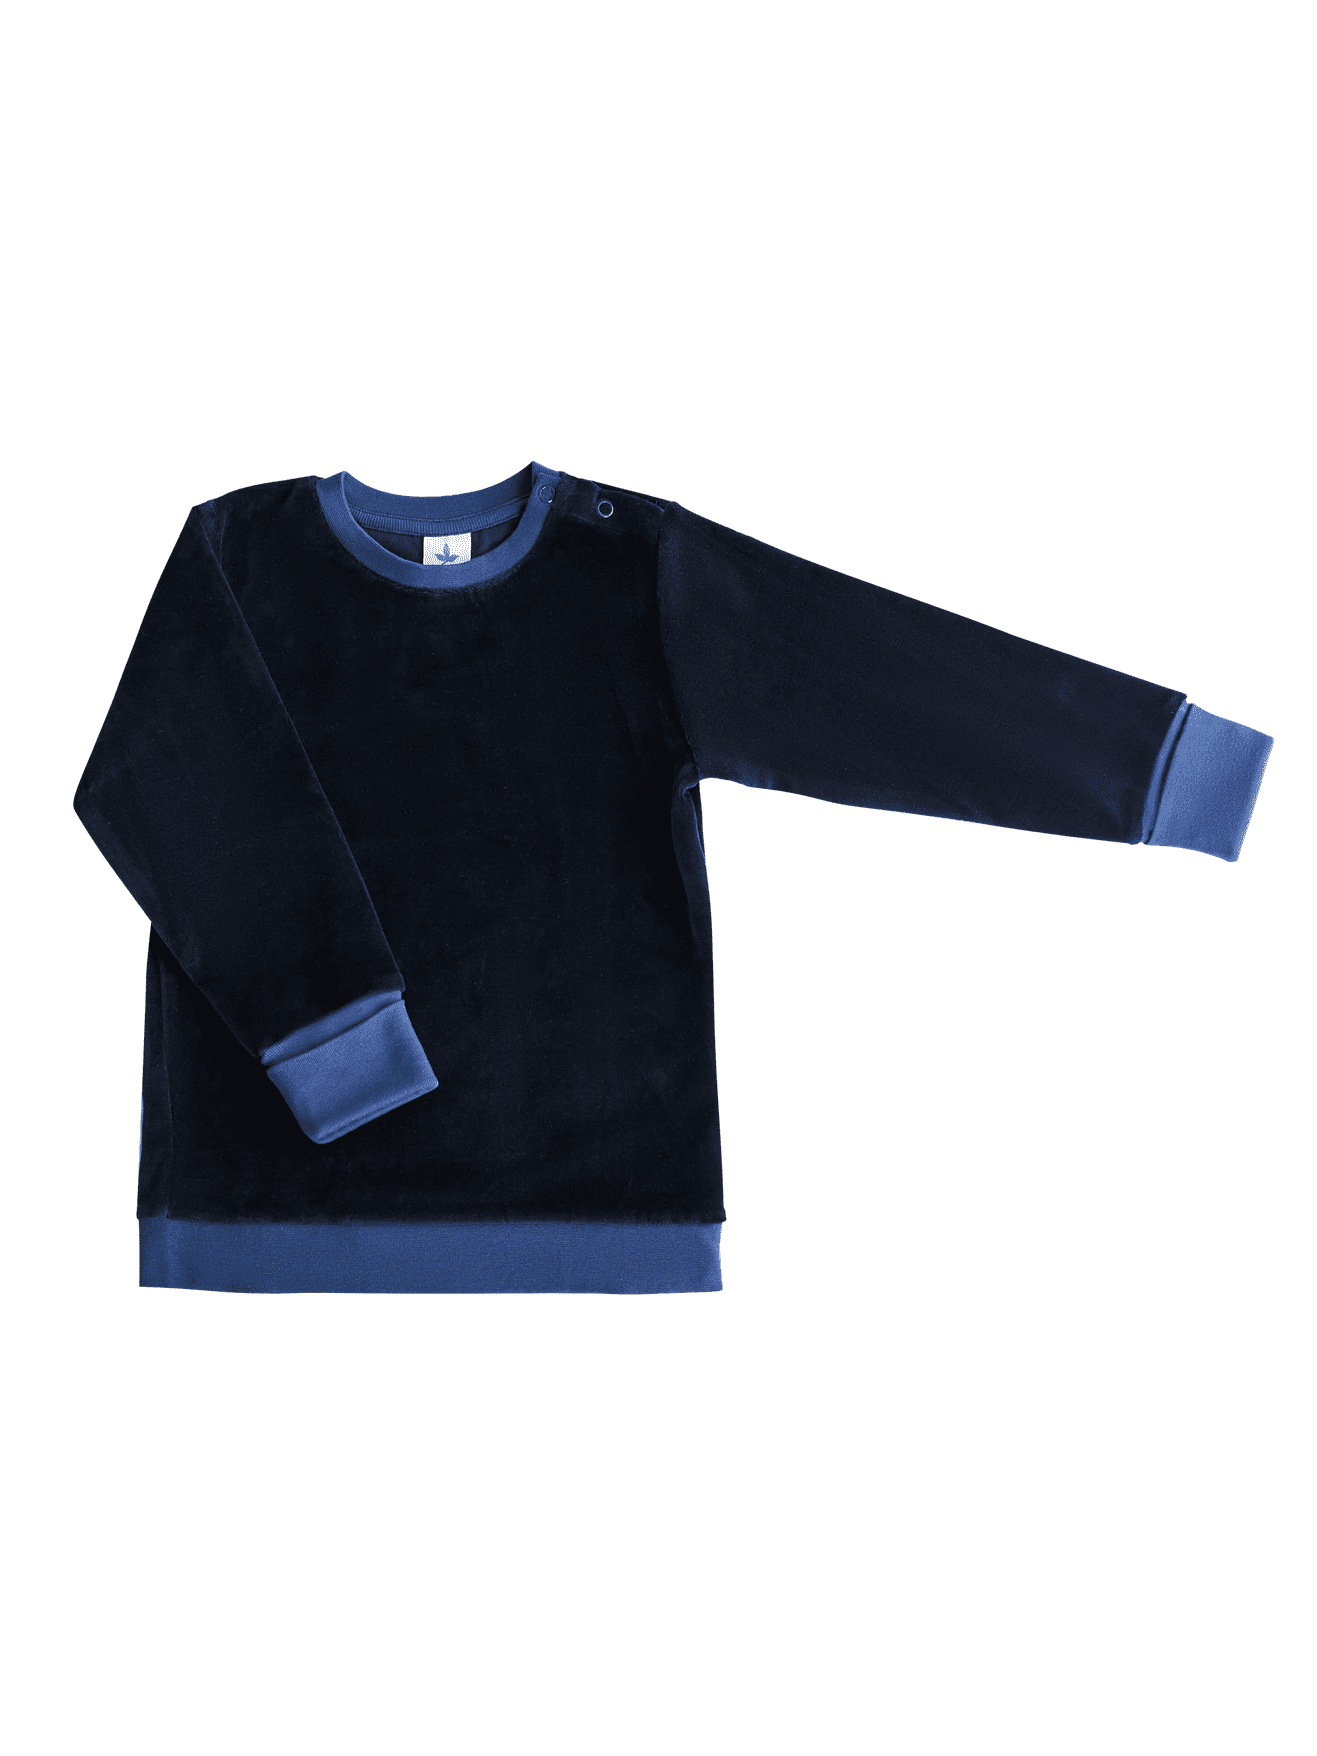 2477 AB | Baby Nickysweatshirt - Nachtblau